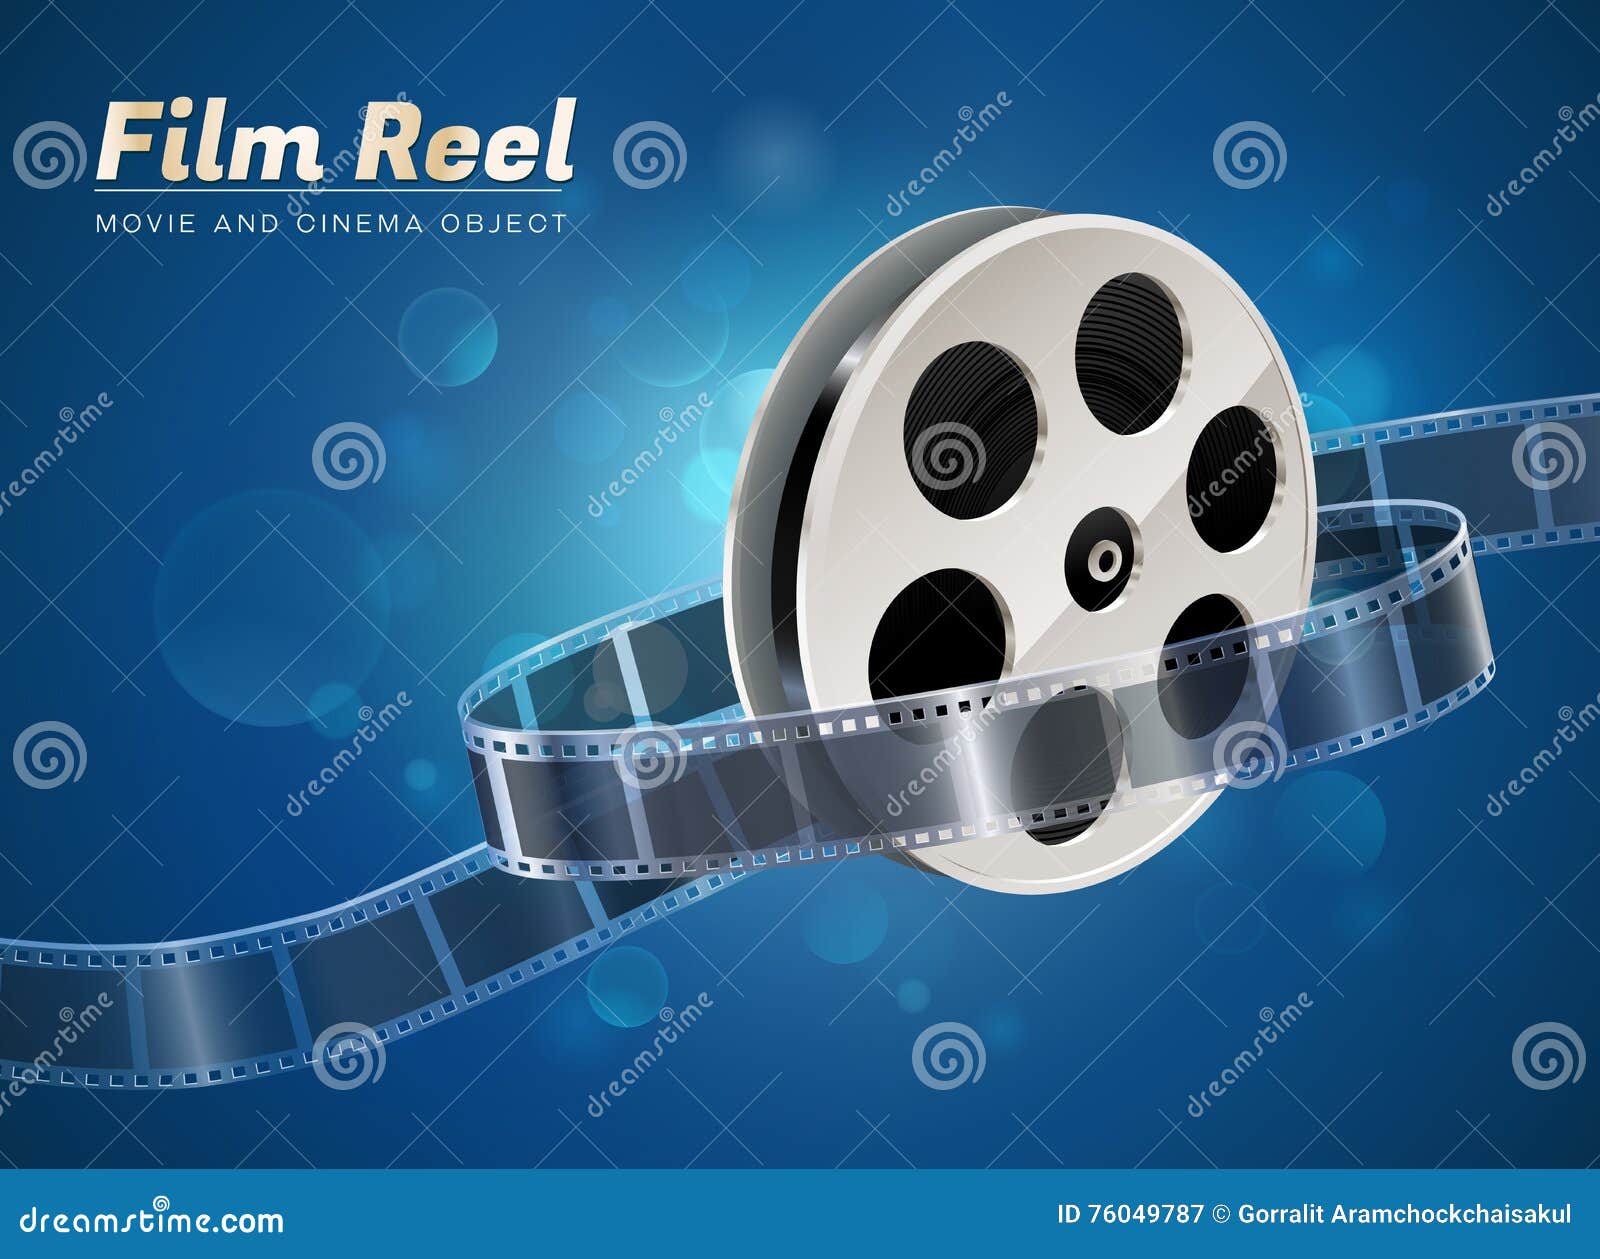 Film Reel Movie Cinema Object Stock Vector - Illustration of packaging,  design: 76049787